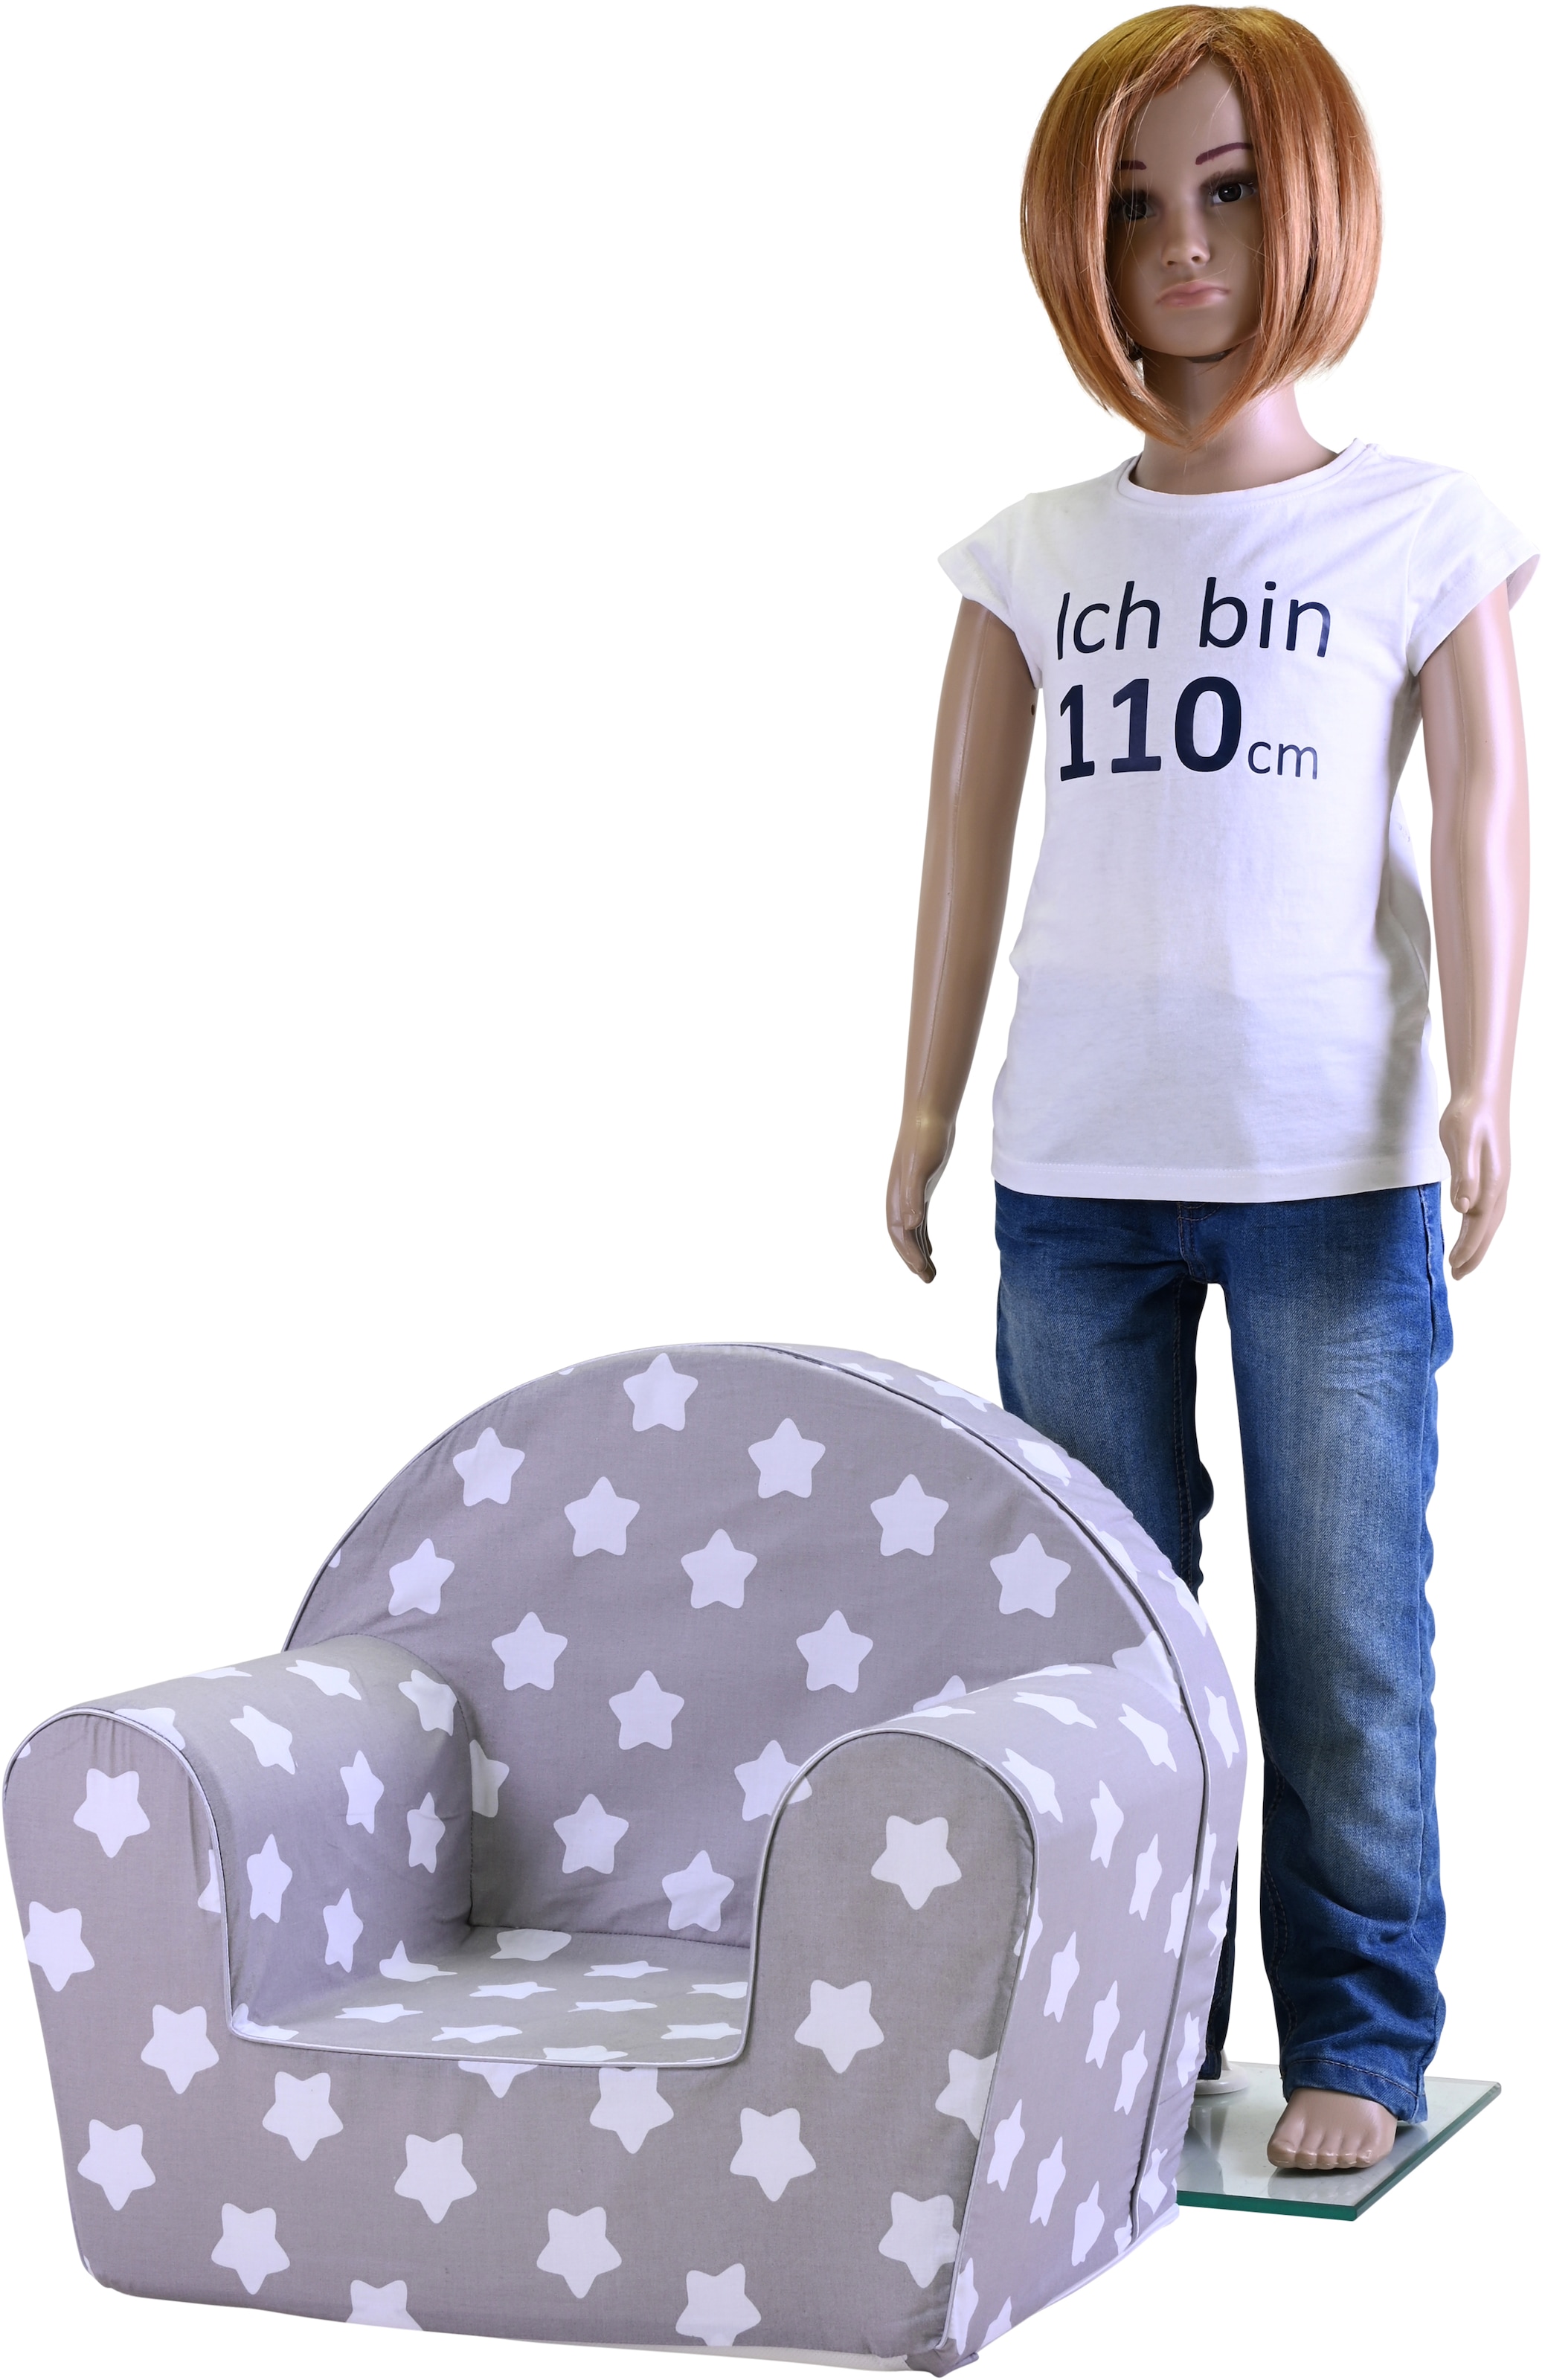 Knorrtoys® Sessel »Grey White Stars«, für Kinder; Made in Europe bei